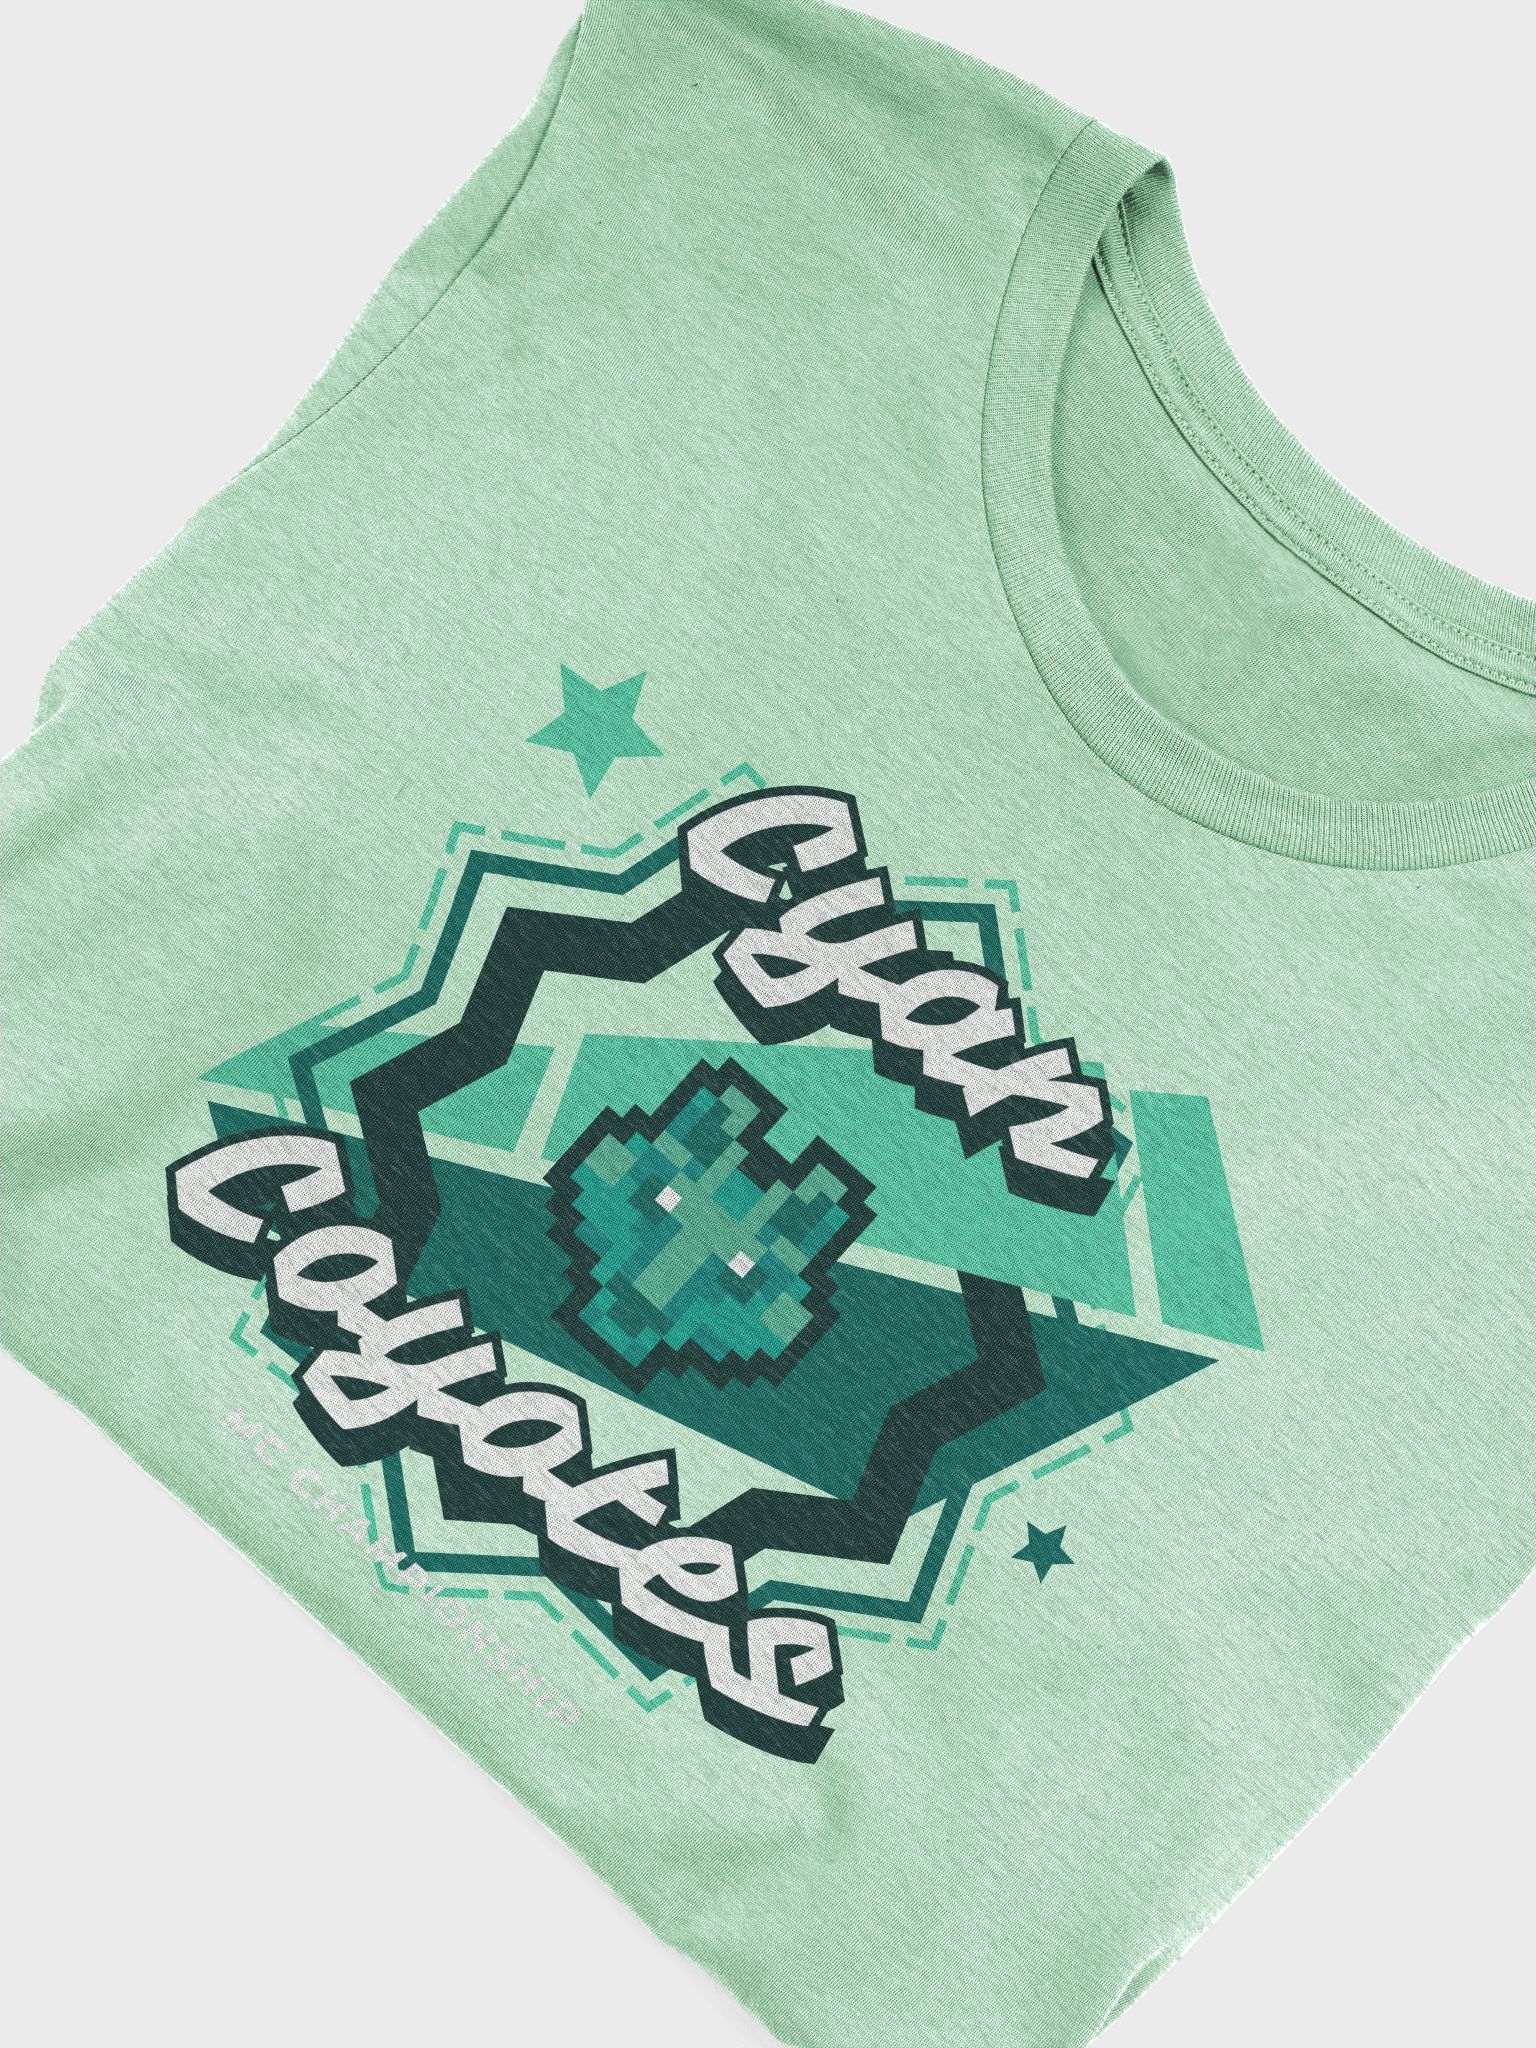 Cyan Coyotes Team T-Shirt  MC Championship & Noxcrew Merchandise